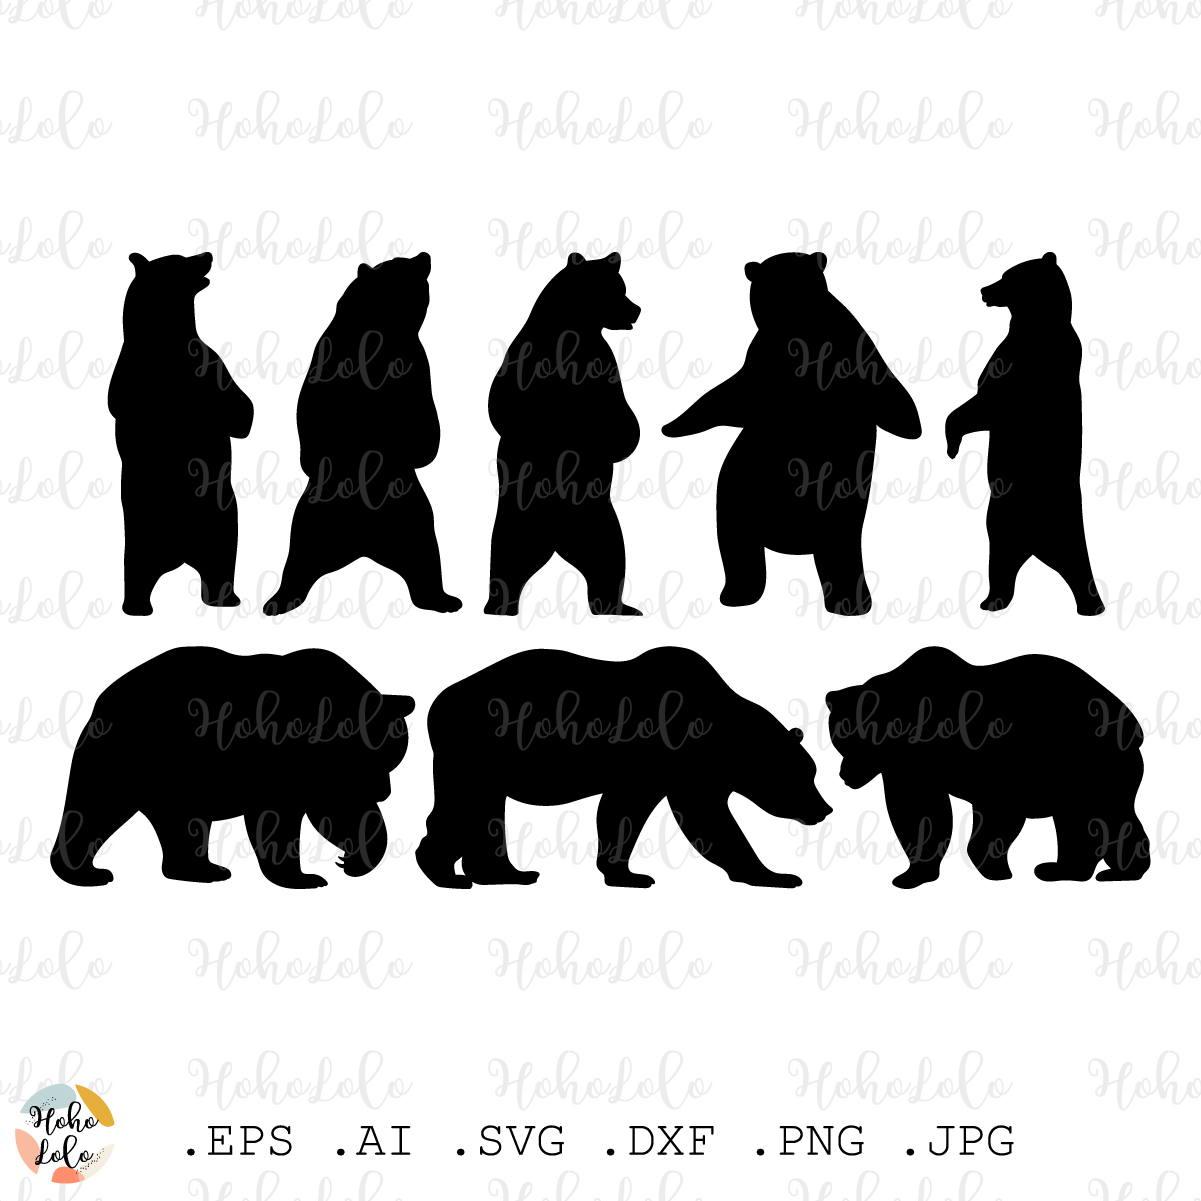 bear silhouette vector